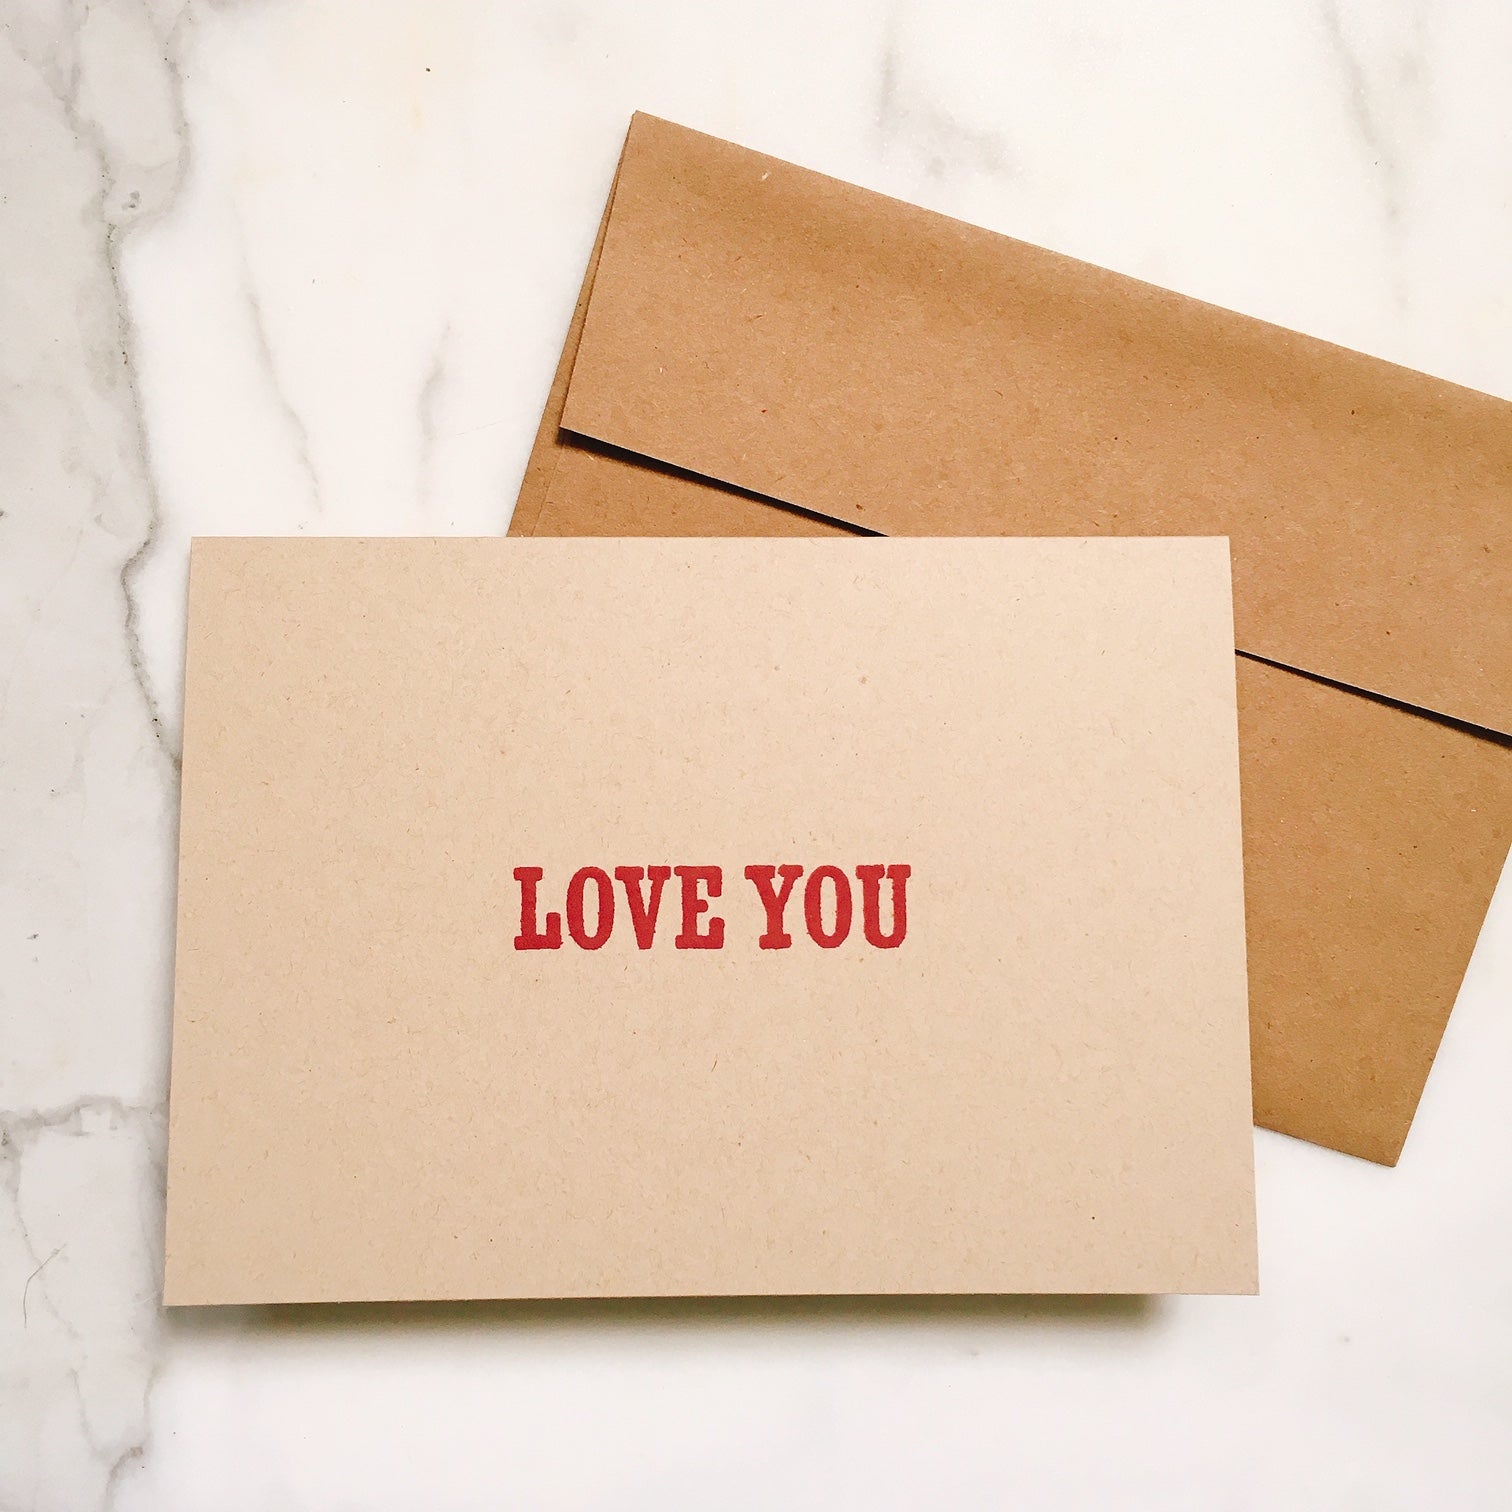 Love you - Greeting Card